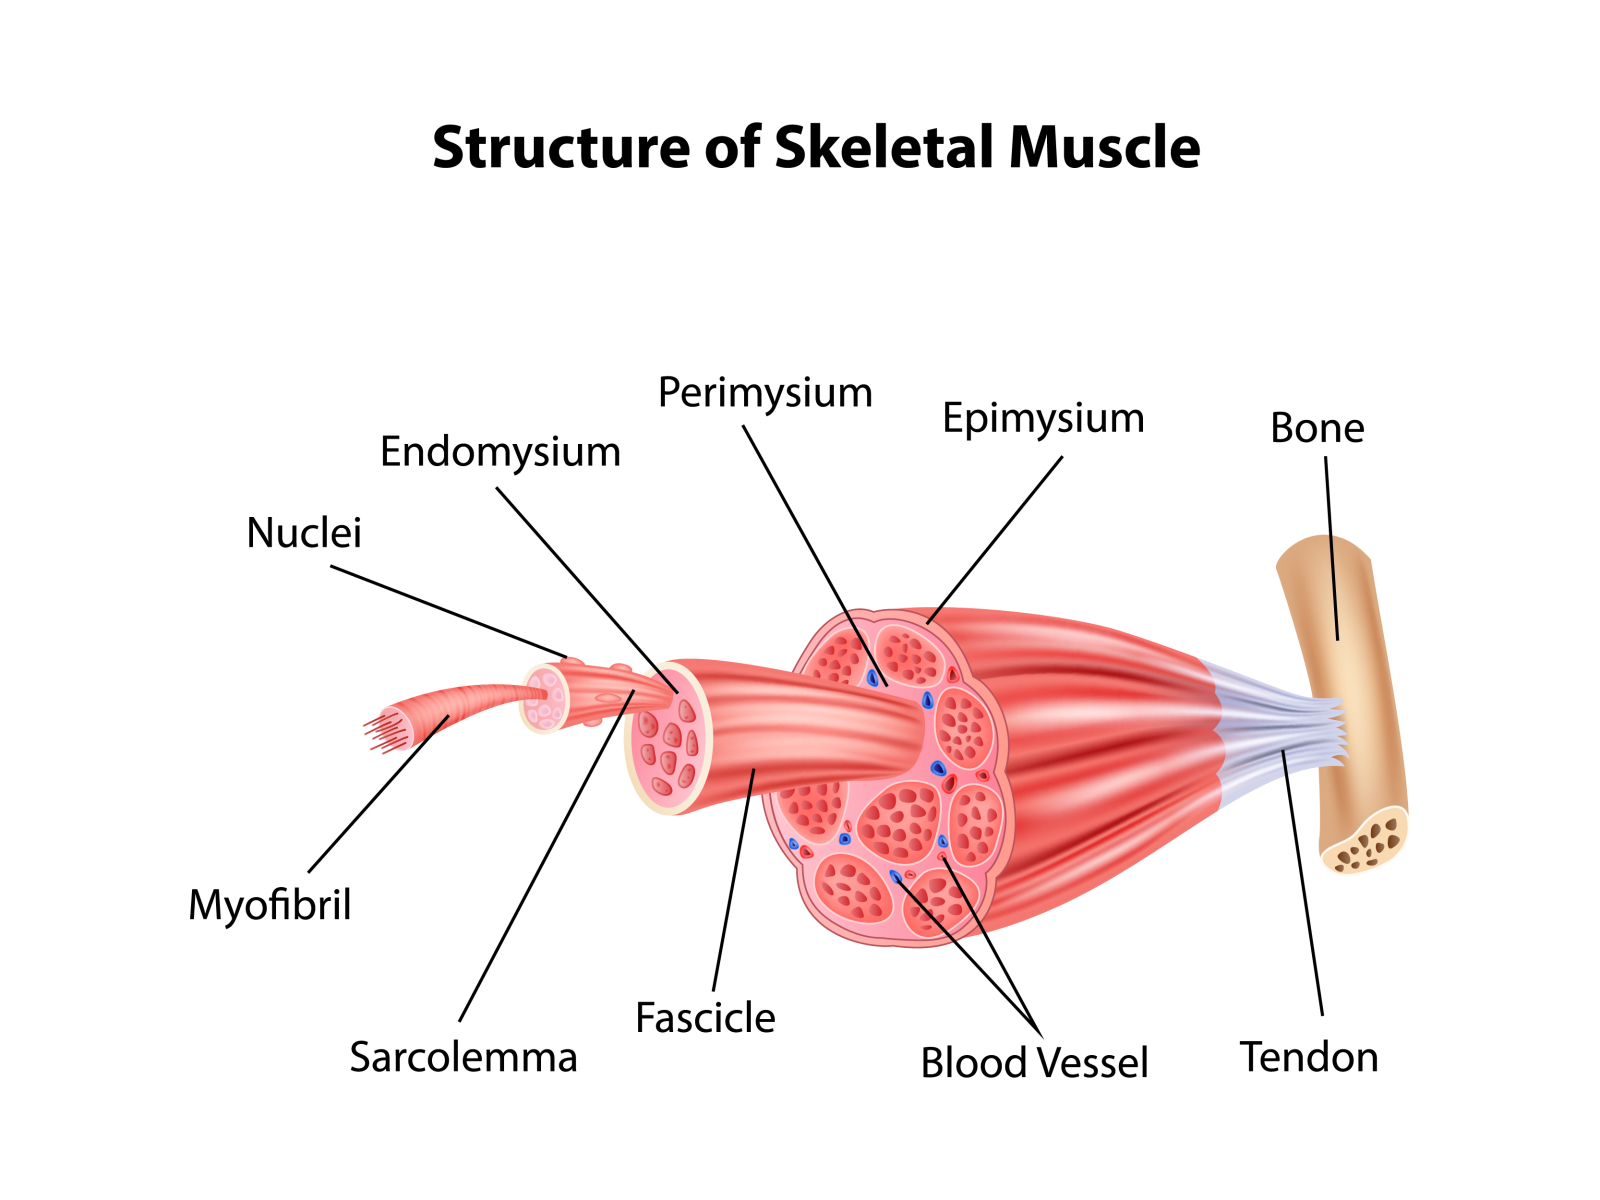 Structure Skeletal Muscle Anatomy by Tigatelu on Dribbble